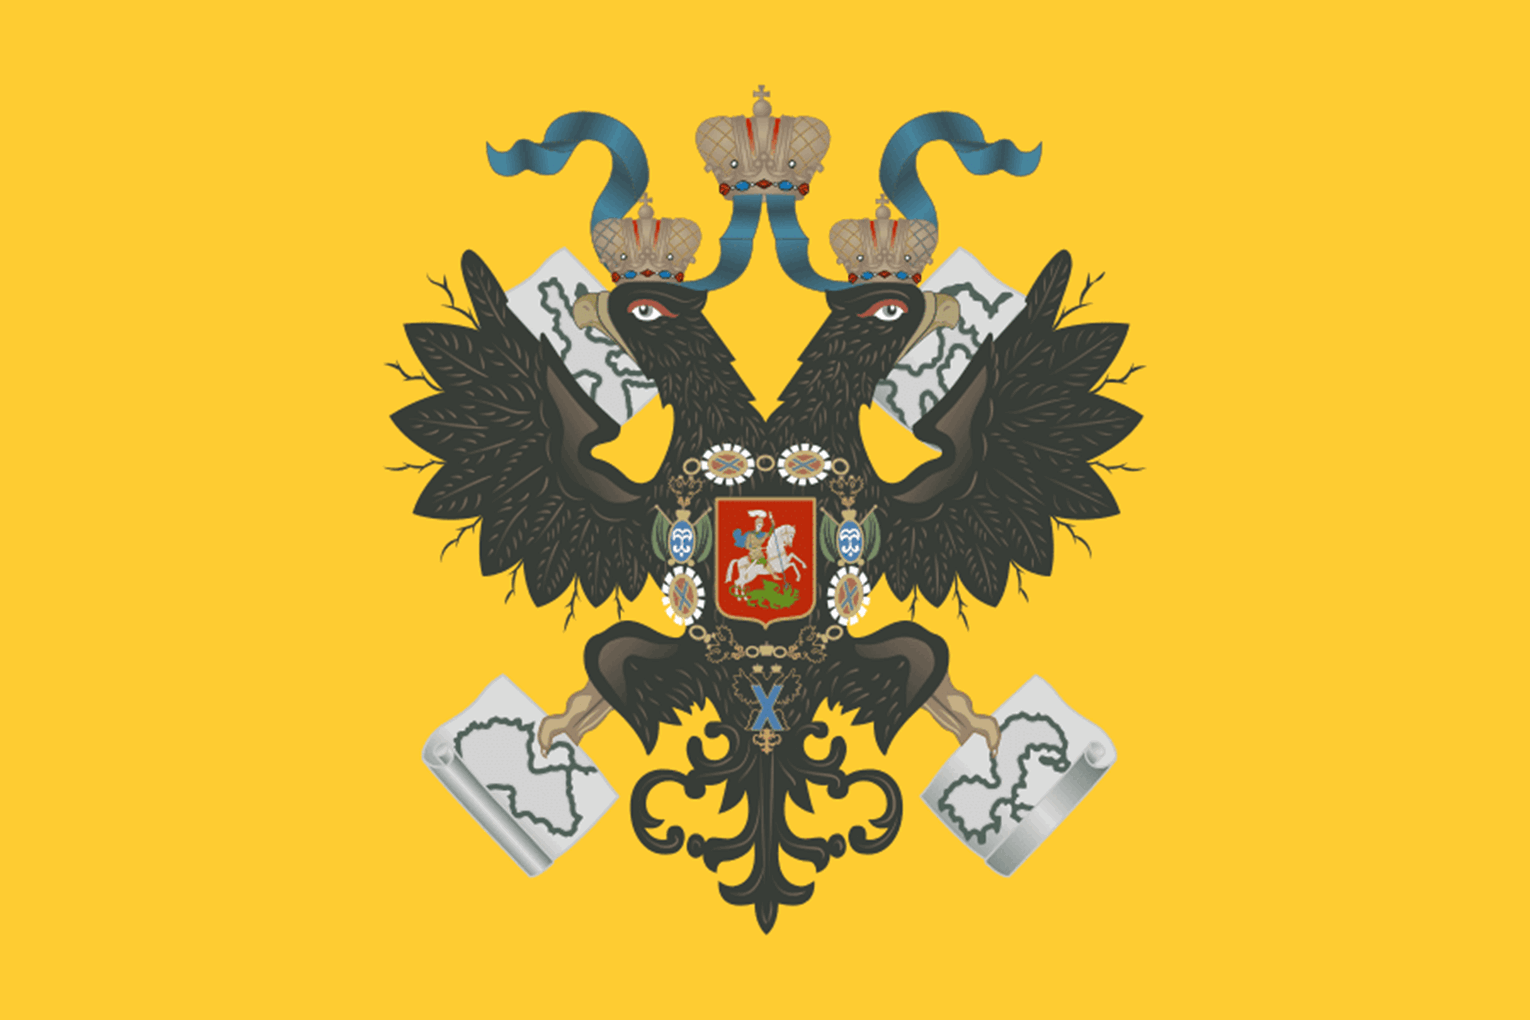 Russia Flag – Colonial Flag